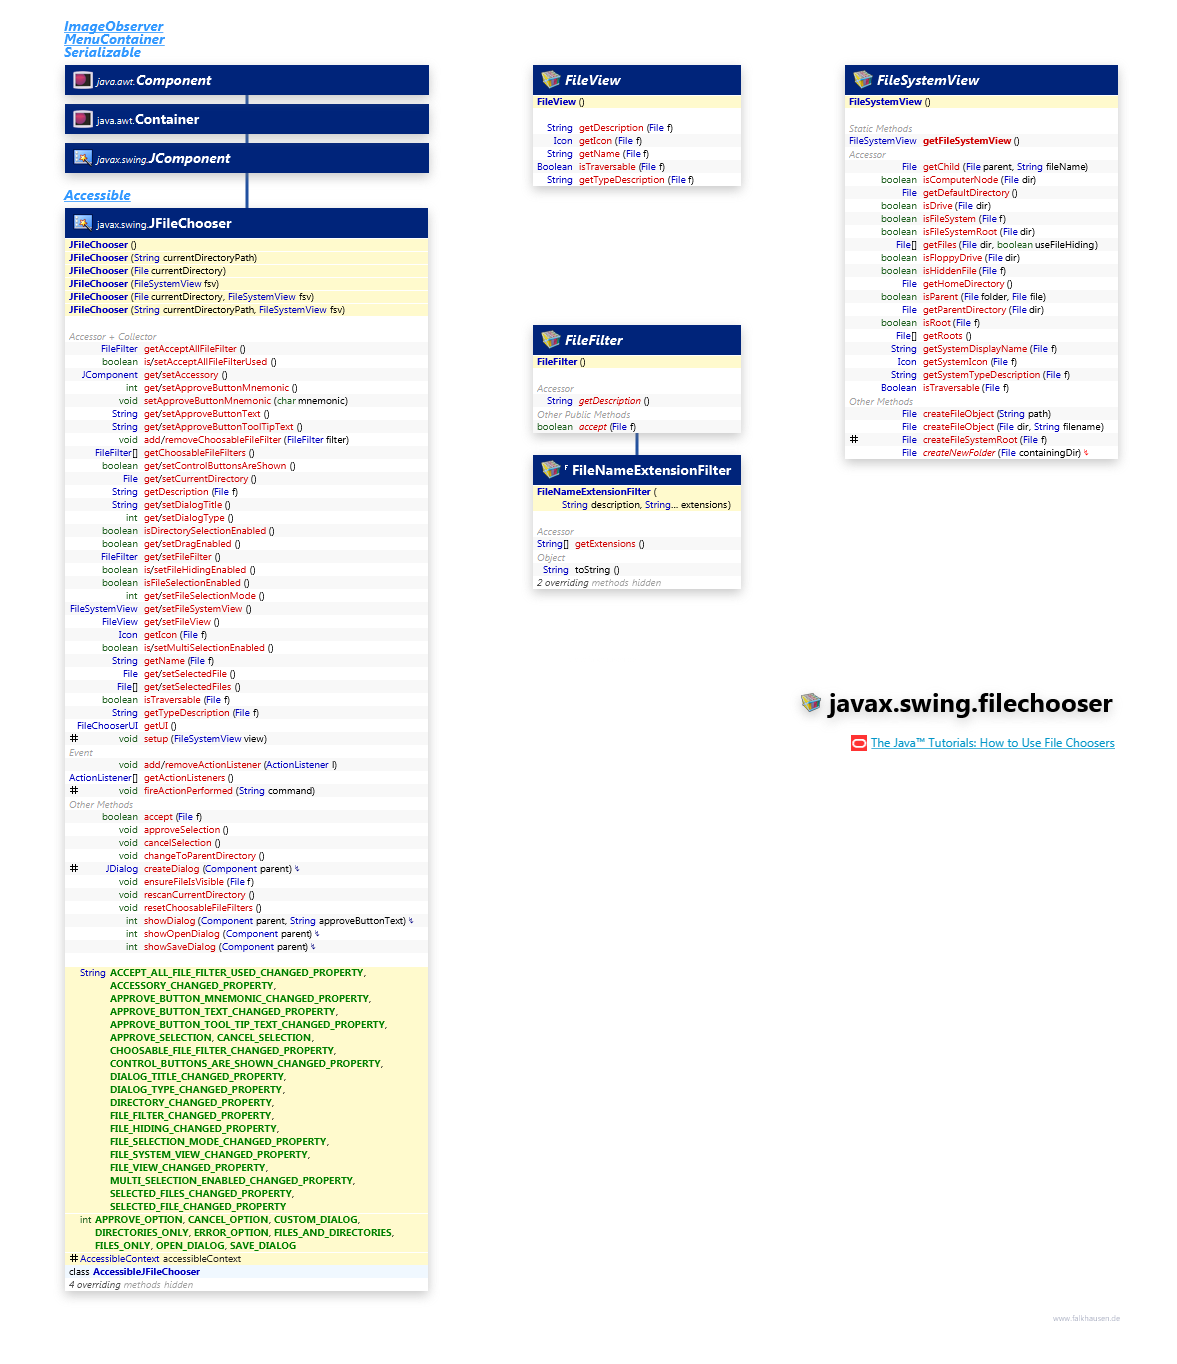 javax.swing.filechooser class diagram and api documentation for Java 7